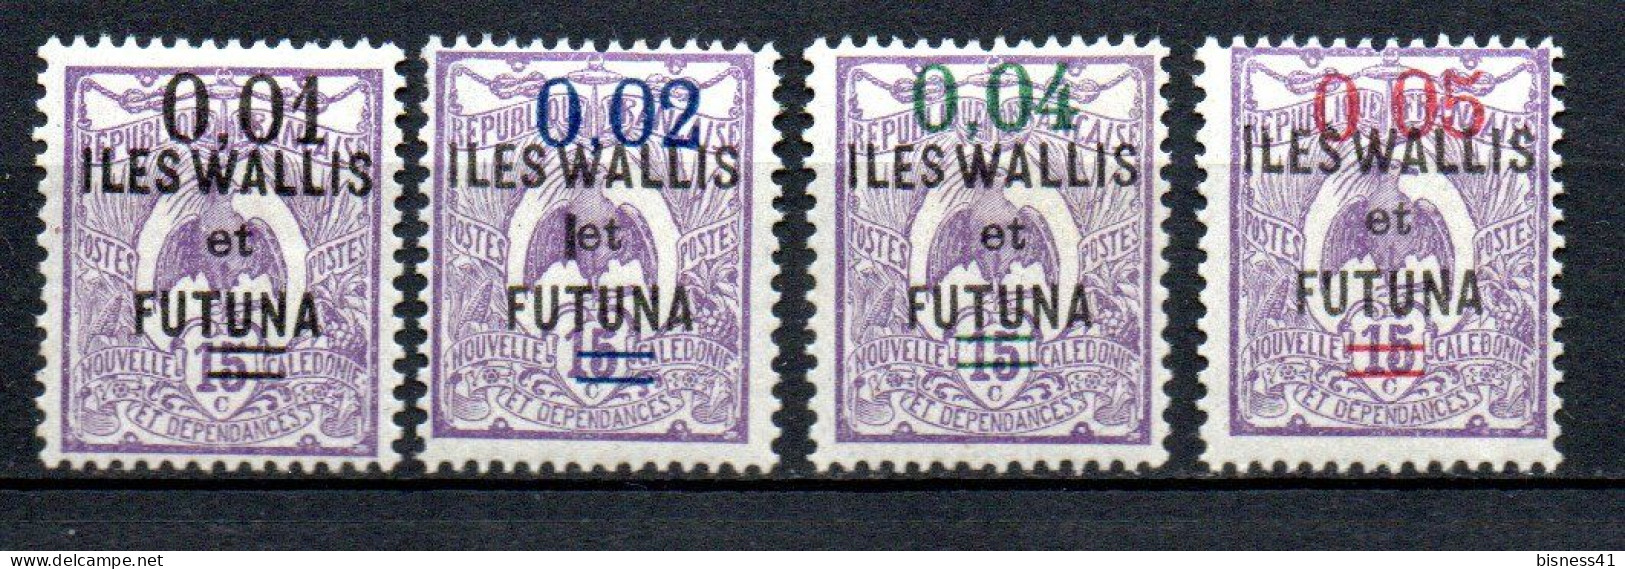 Col33 Colonie Wallis & Futuna N° 26 à 29 Neuf X MH Cote : 4,00€ - Unused Stamps